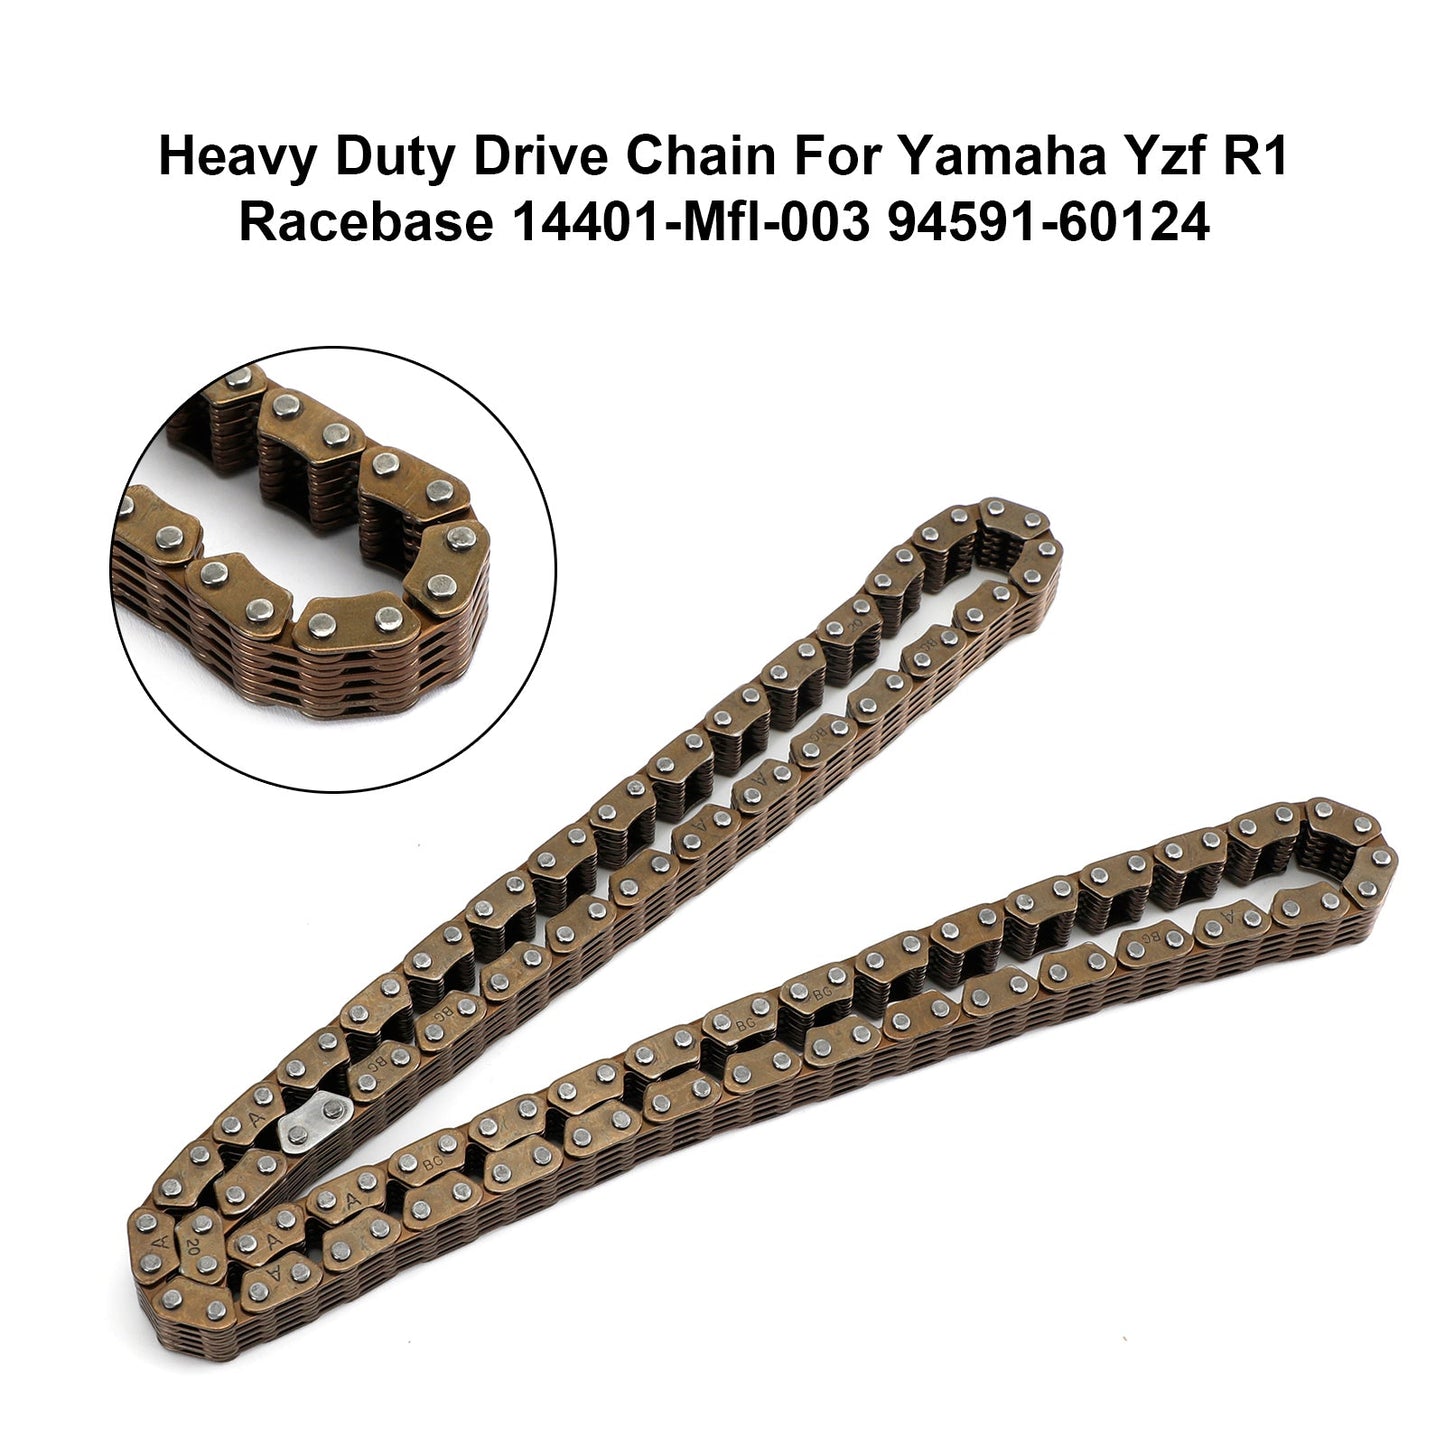 New Heavy Duty Drive Chain For Yamaha Yzf R1 Racebase 14401-Mfl-003 94591-60124